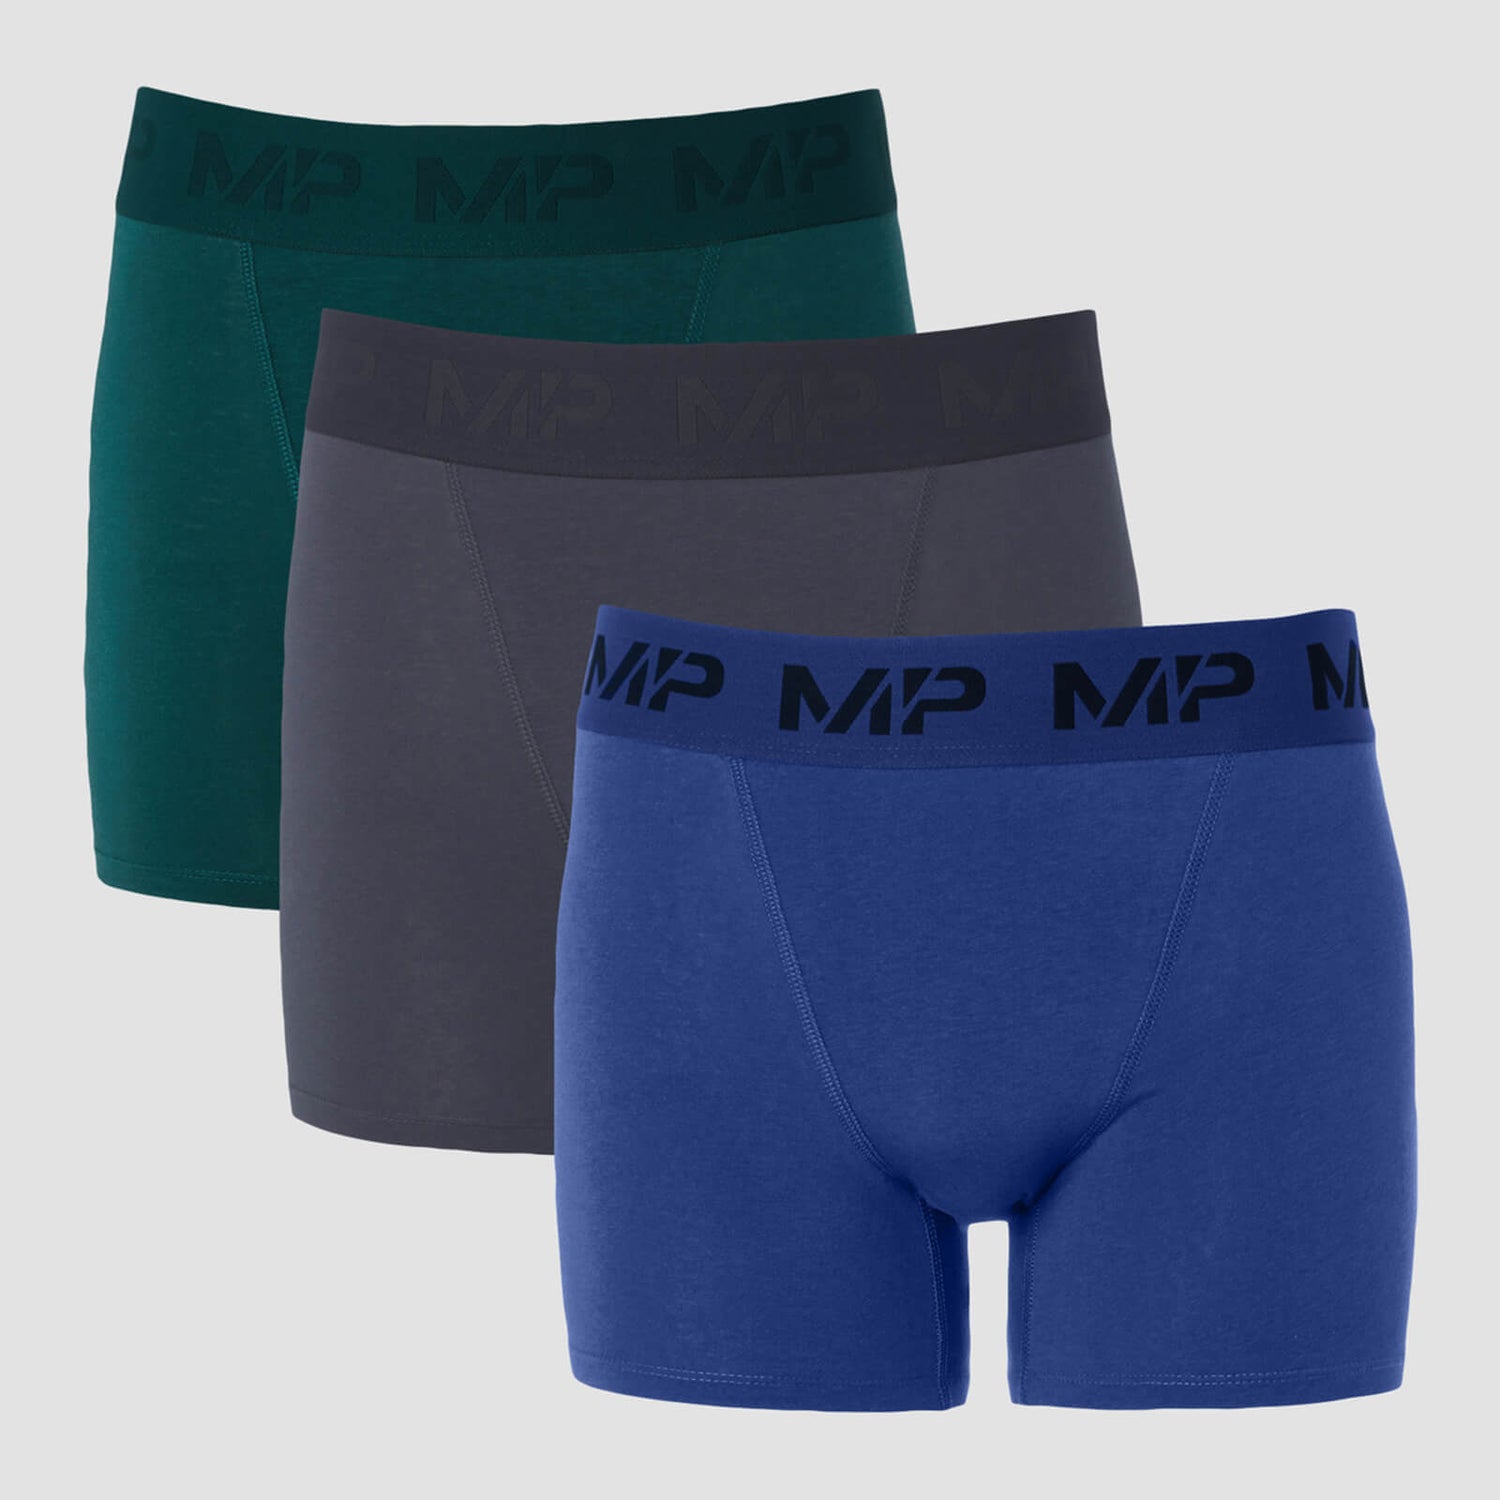 MP Men's Boxers (3 Pack) - Deep Teal/Graphite/Intense Blue